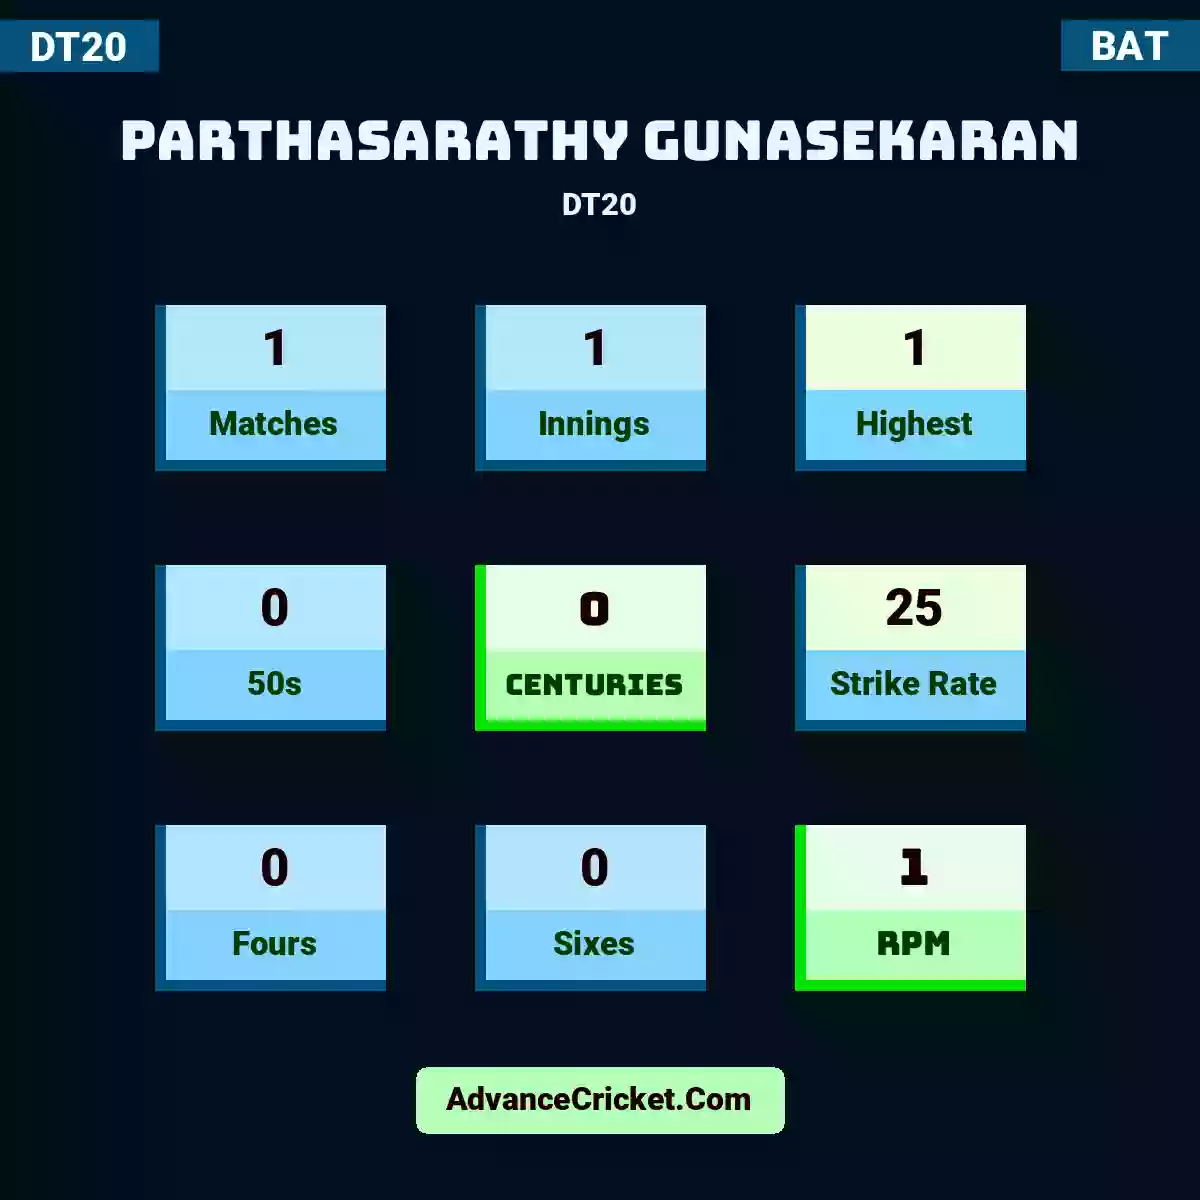 Parthasarathy Gunasekaran DT20 , Parthasarathy Gunasekaran played 1 matches, scored 1 runs as highest, 0 half-centuries, and 0 centuries, with a strike rate of 25. P.Gunasekaran hit 0 fours and 0 sixes, with an RPM of 1.